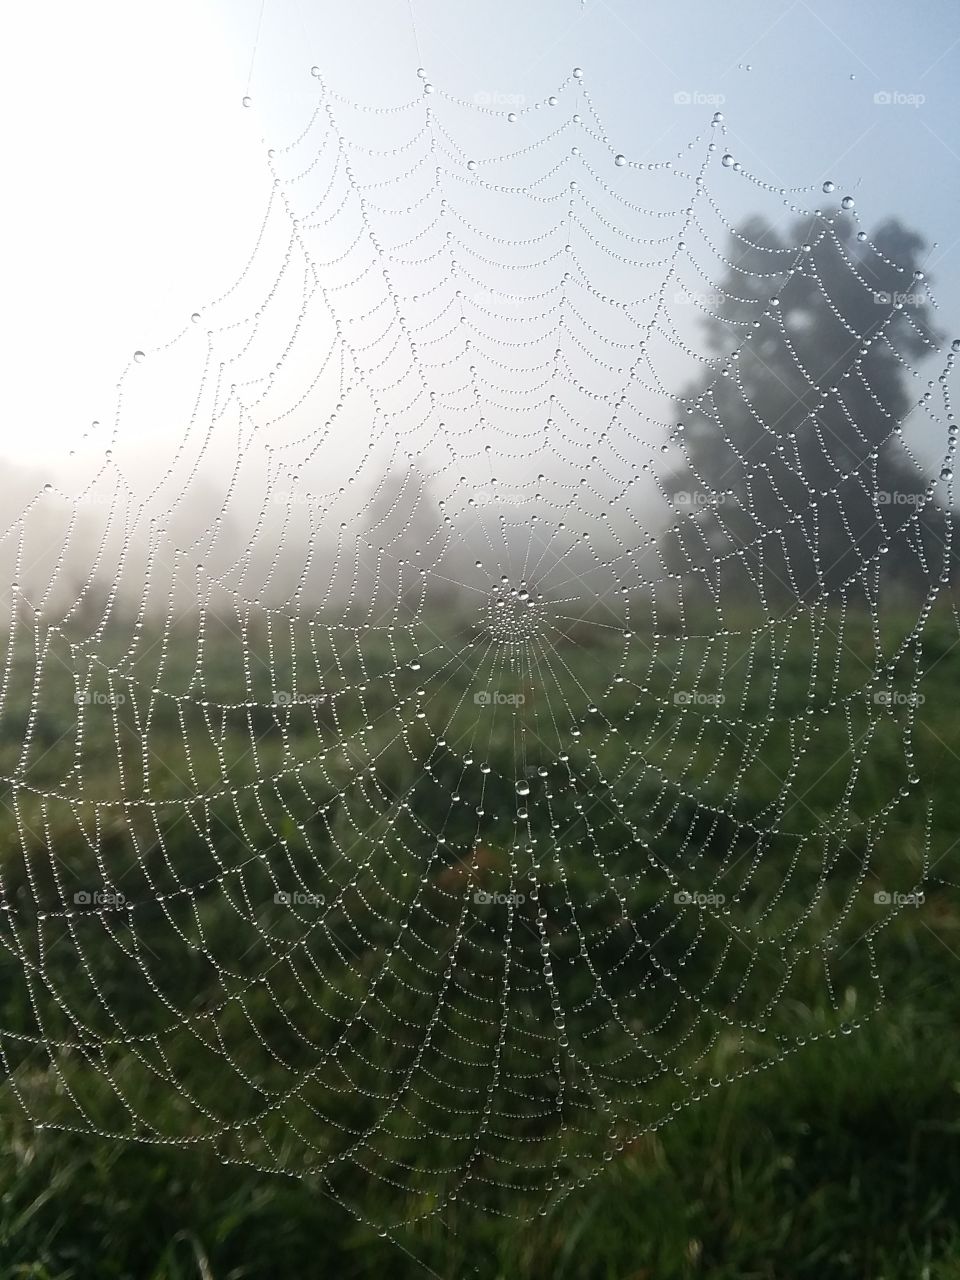 Spider, Spiderweb, Trap, Cobweb, Arachnid